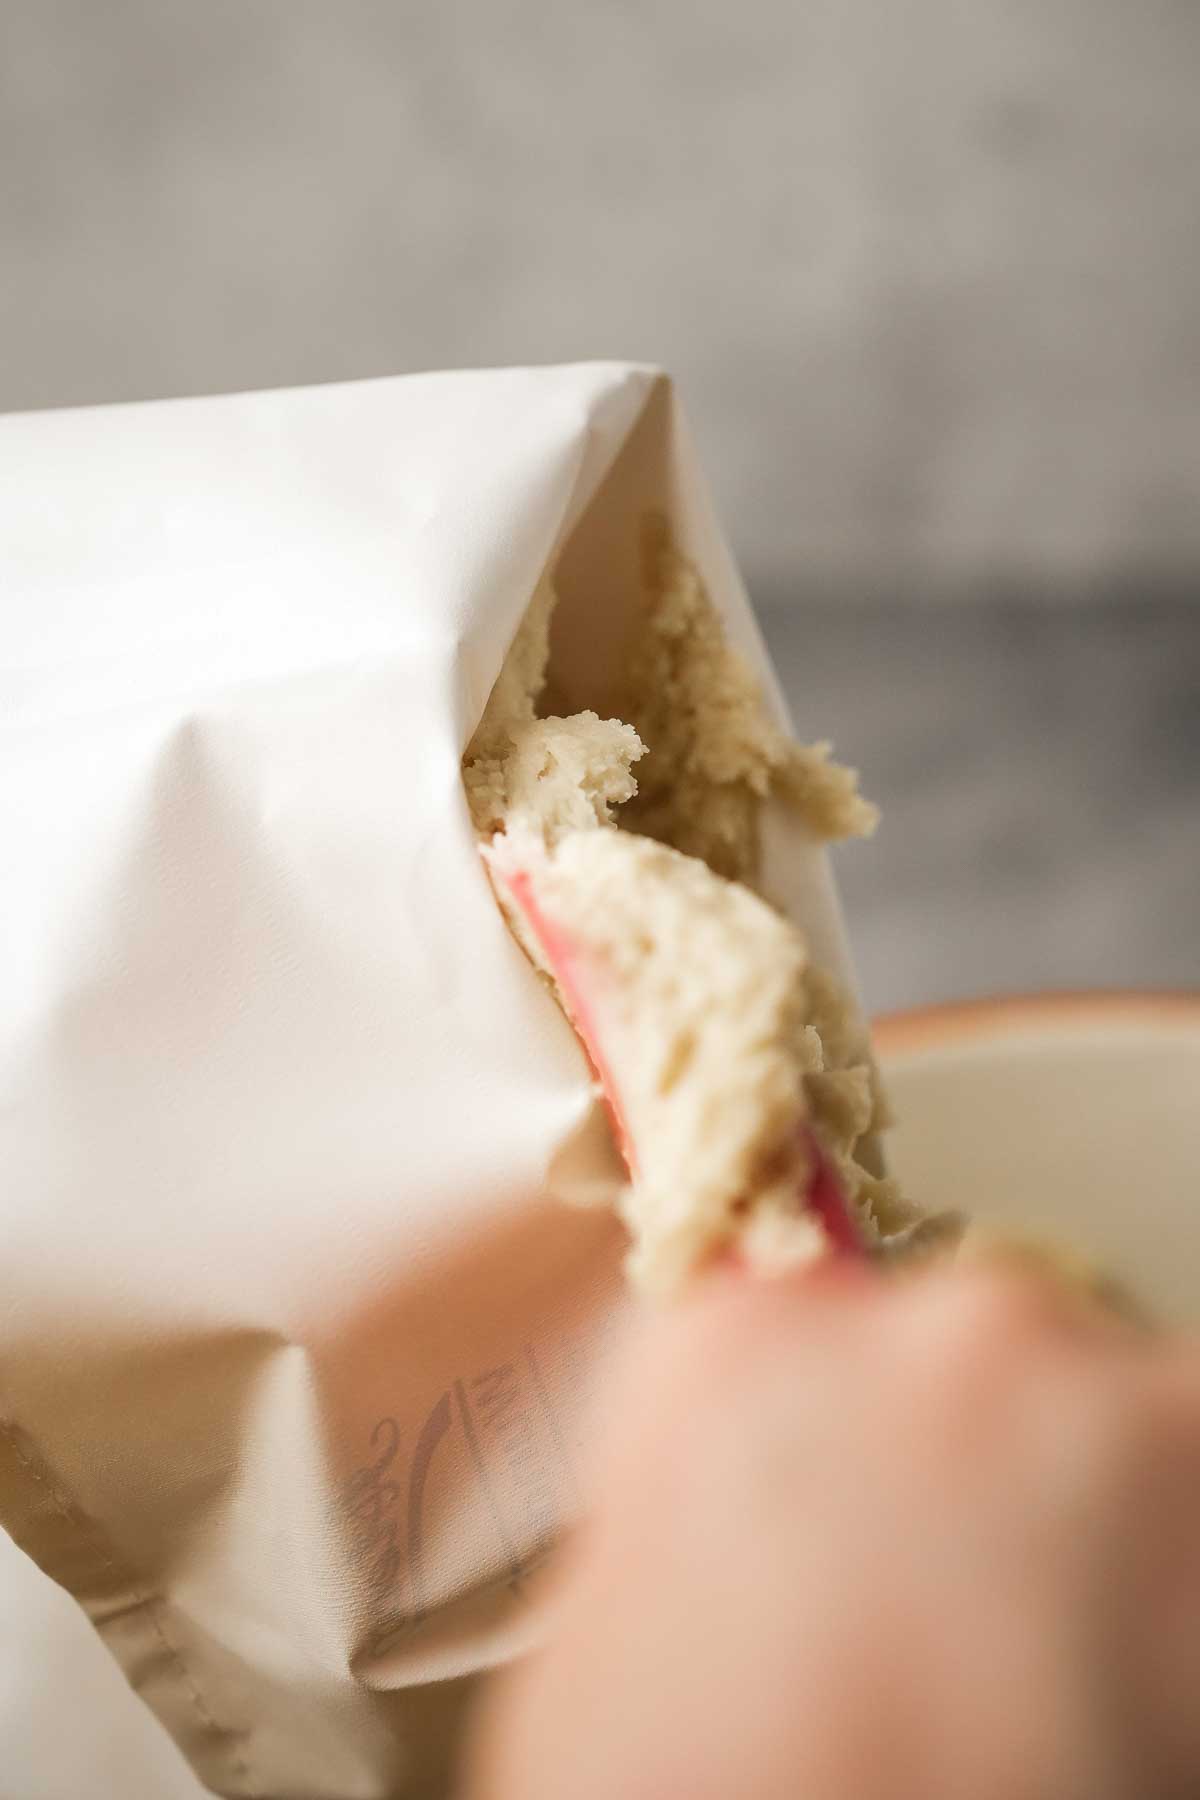 Loading vegan ladyfinger dough into a pastry bag.